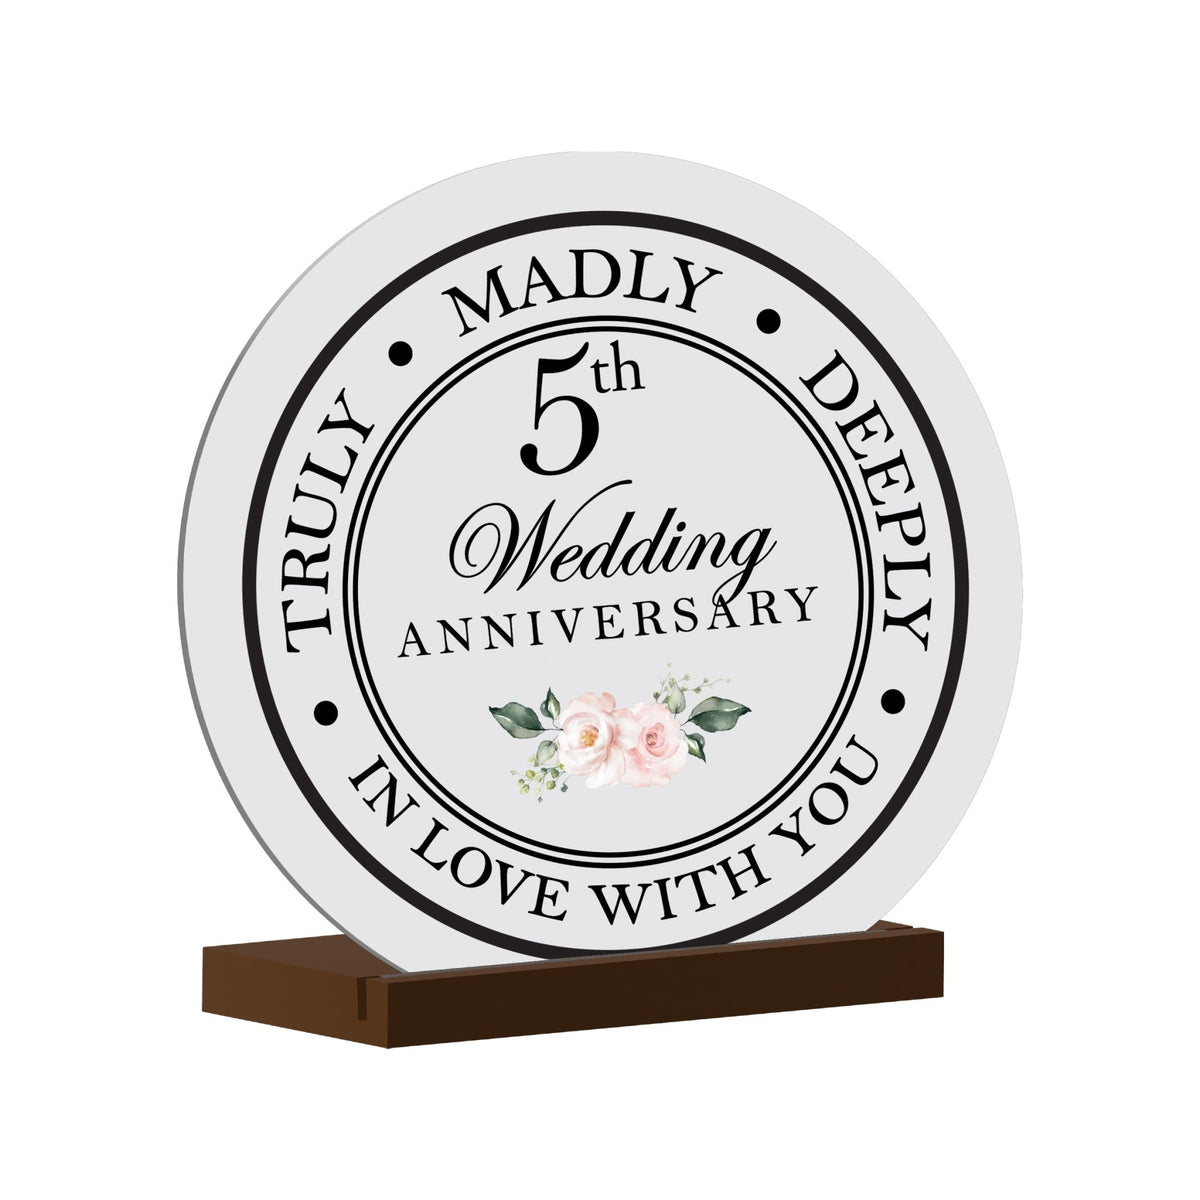 Elegant Wedding Anniversary Celebration Round Sign on Solid Wooden Base - 5th Wedding Anniversary - LifeSong Milestones